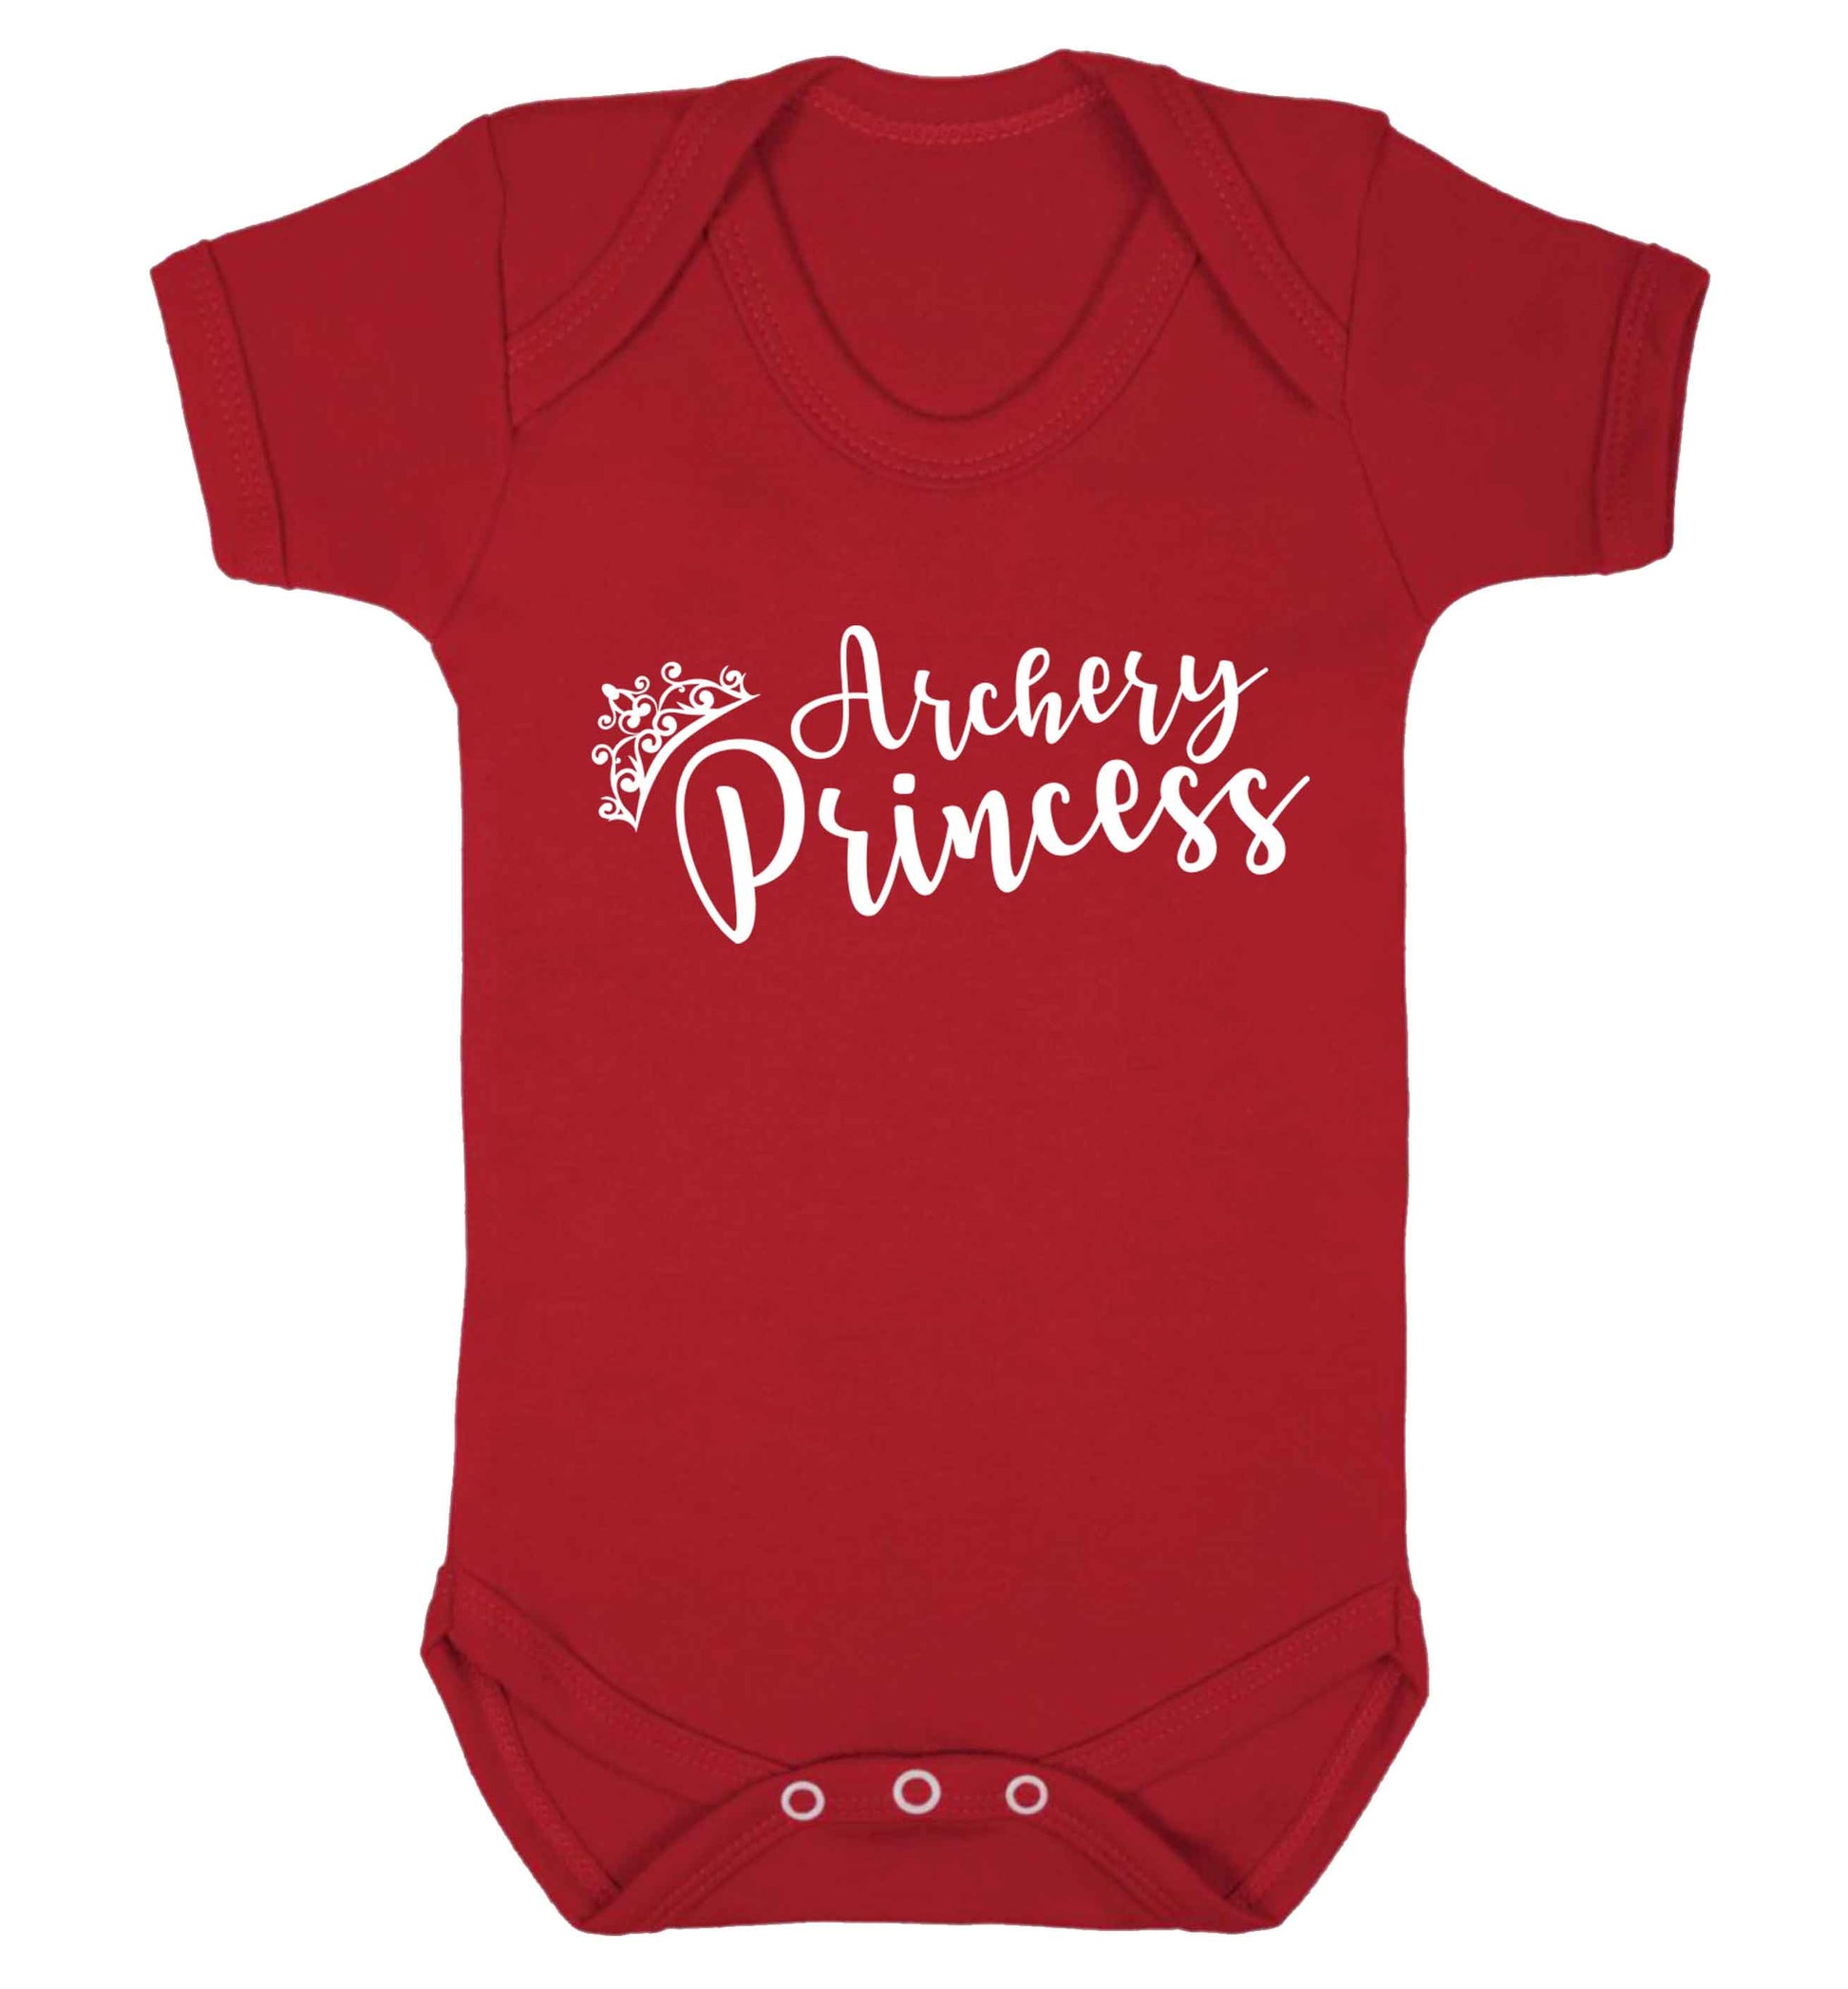 Archery princess Baby Vest red 18-24 months